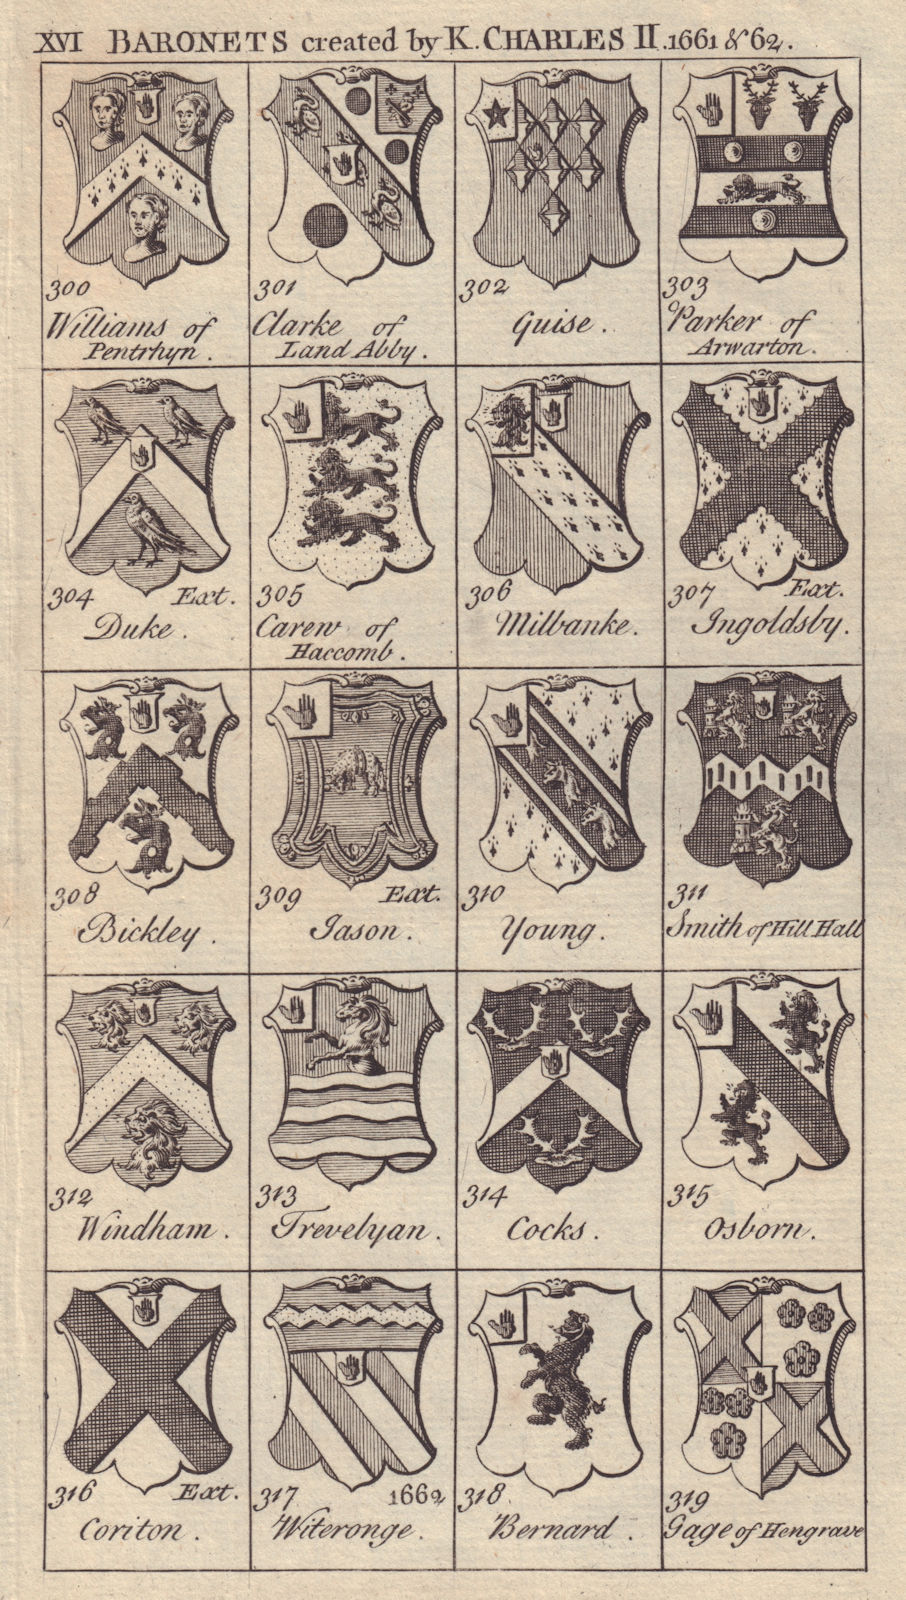 Associate Product Charles II Baronets 1661-62 Guise Duke Milbanke Bickley Jason Young Cocks… 1753